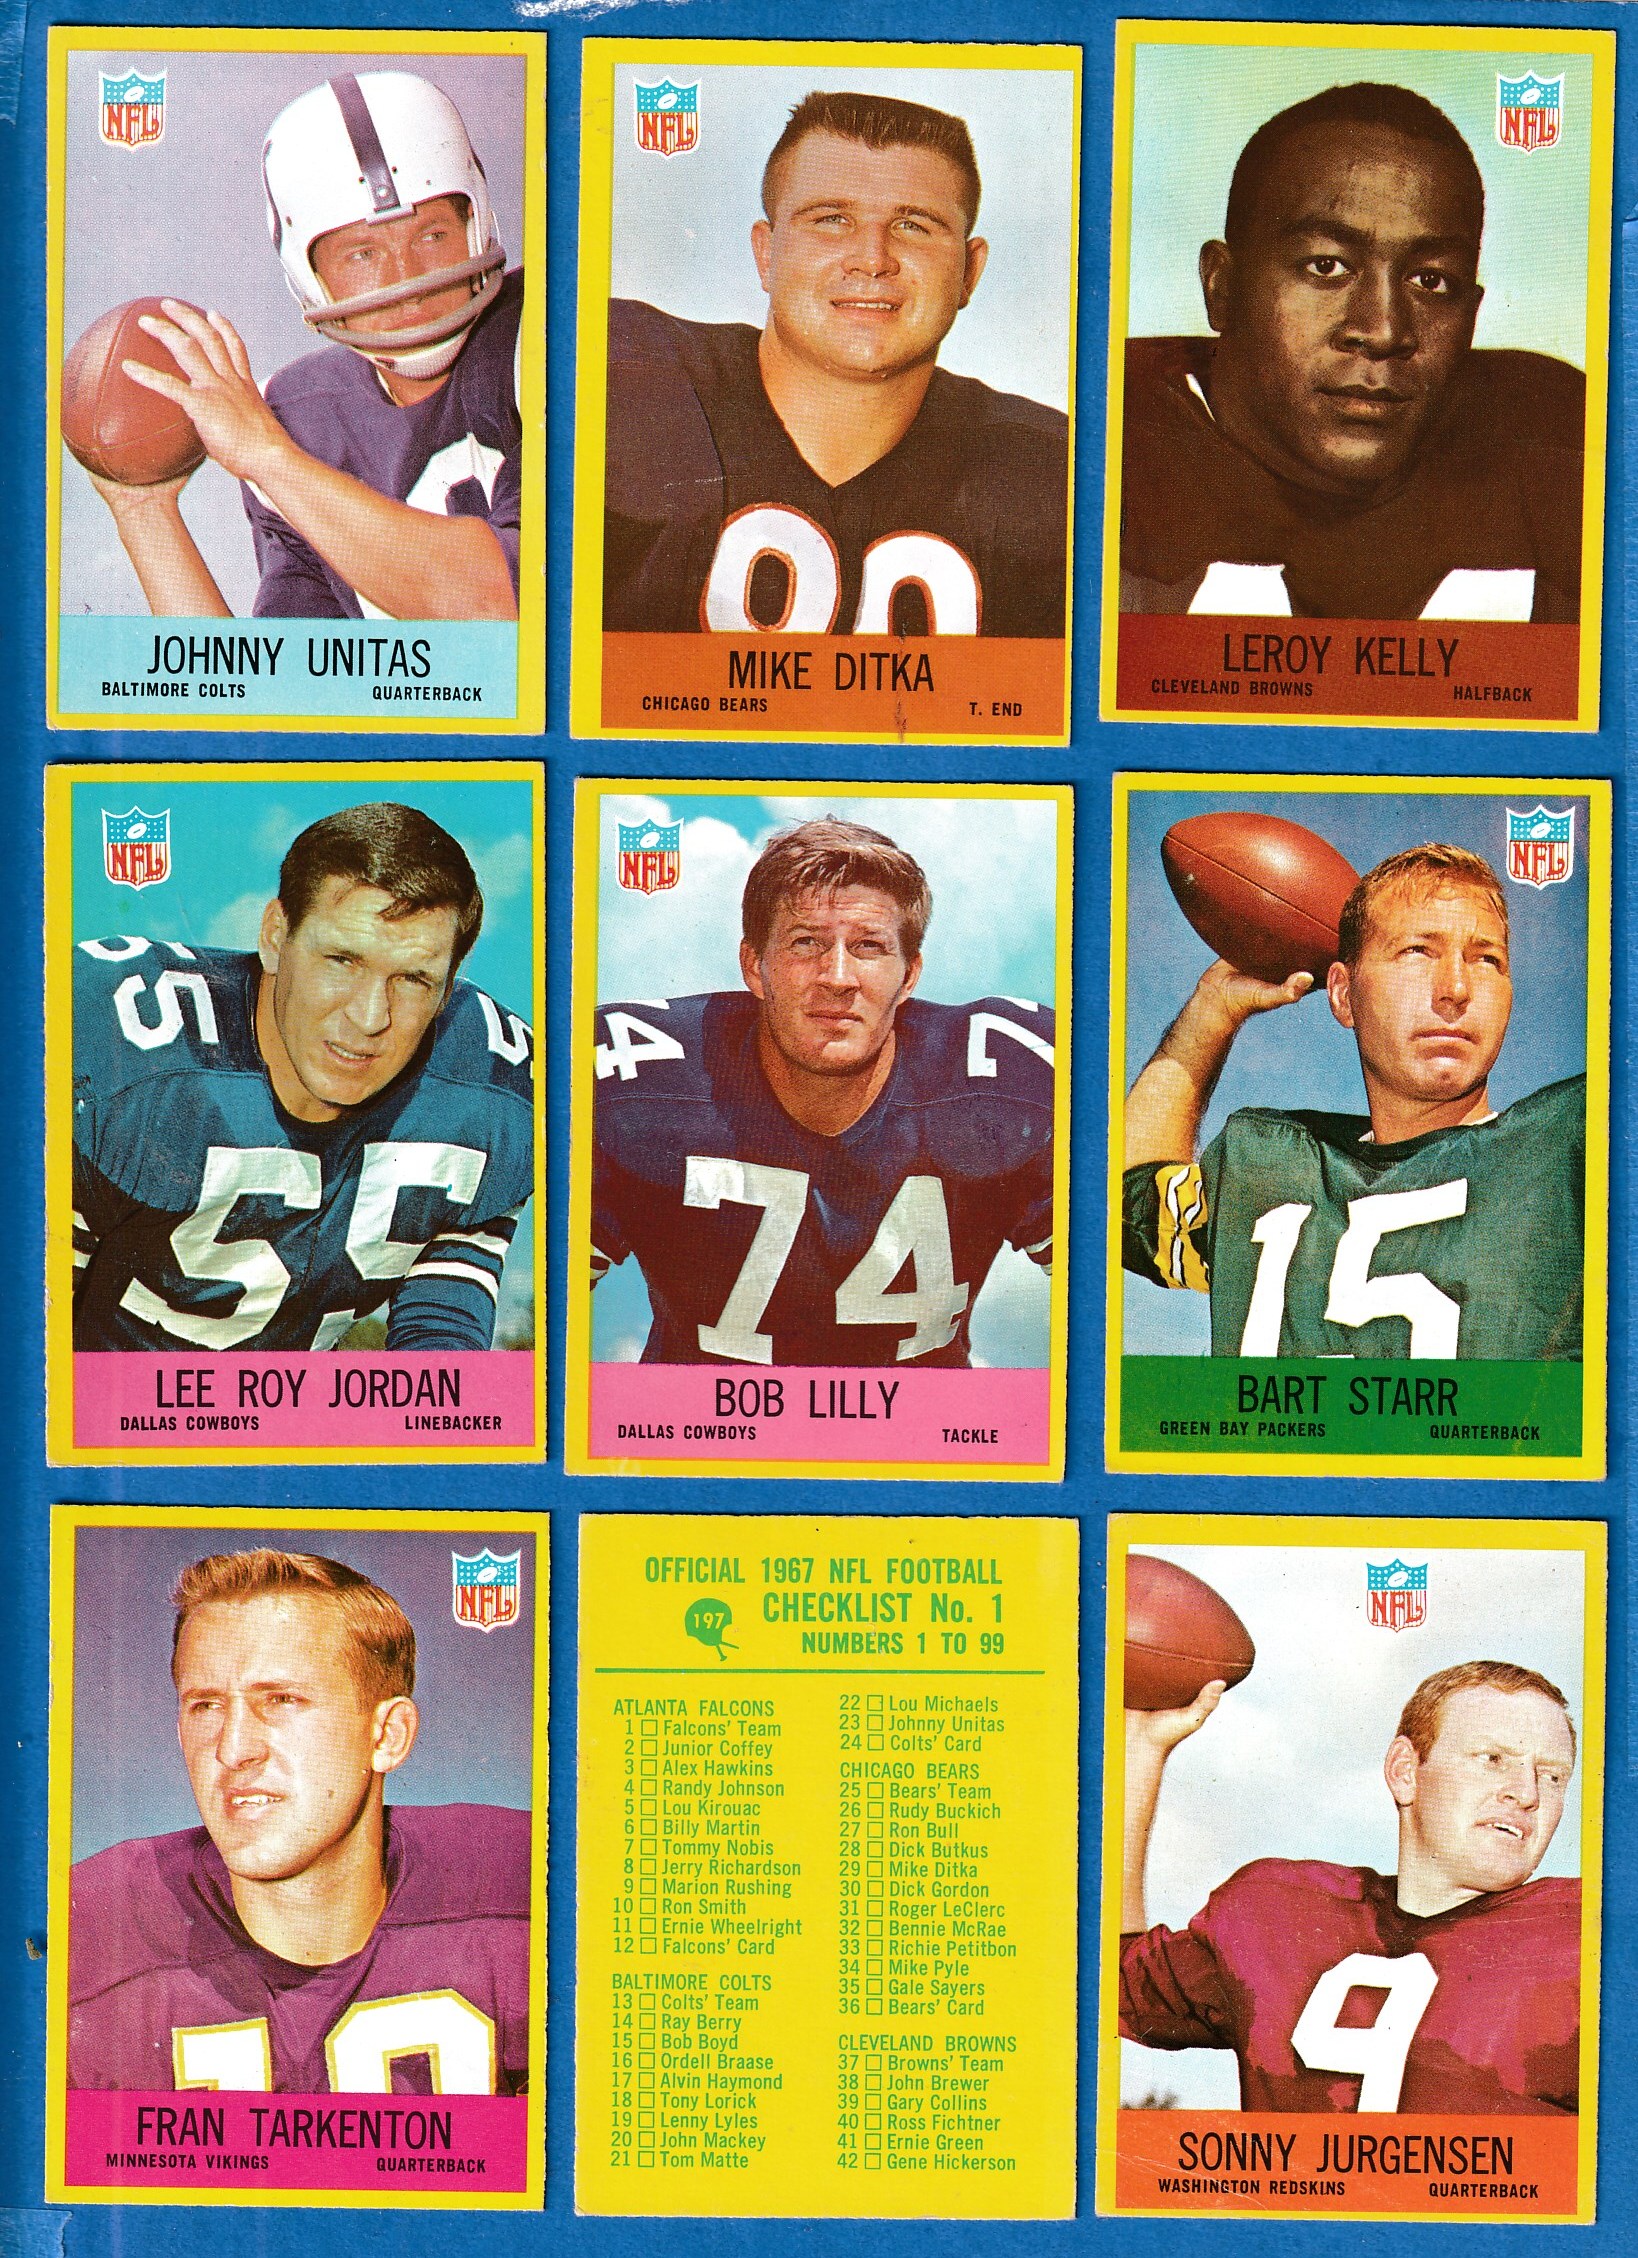 1967 Philadelphia FB # 23 Johnny Unitas [#] (Colts) Football cards value